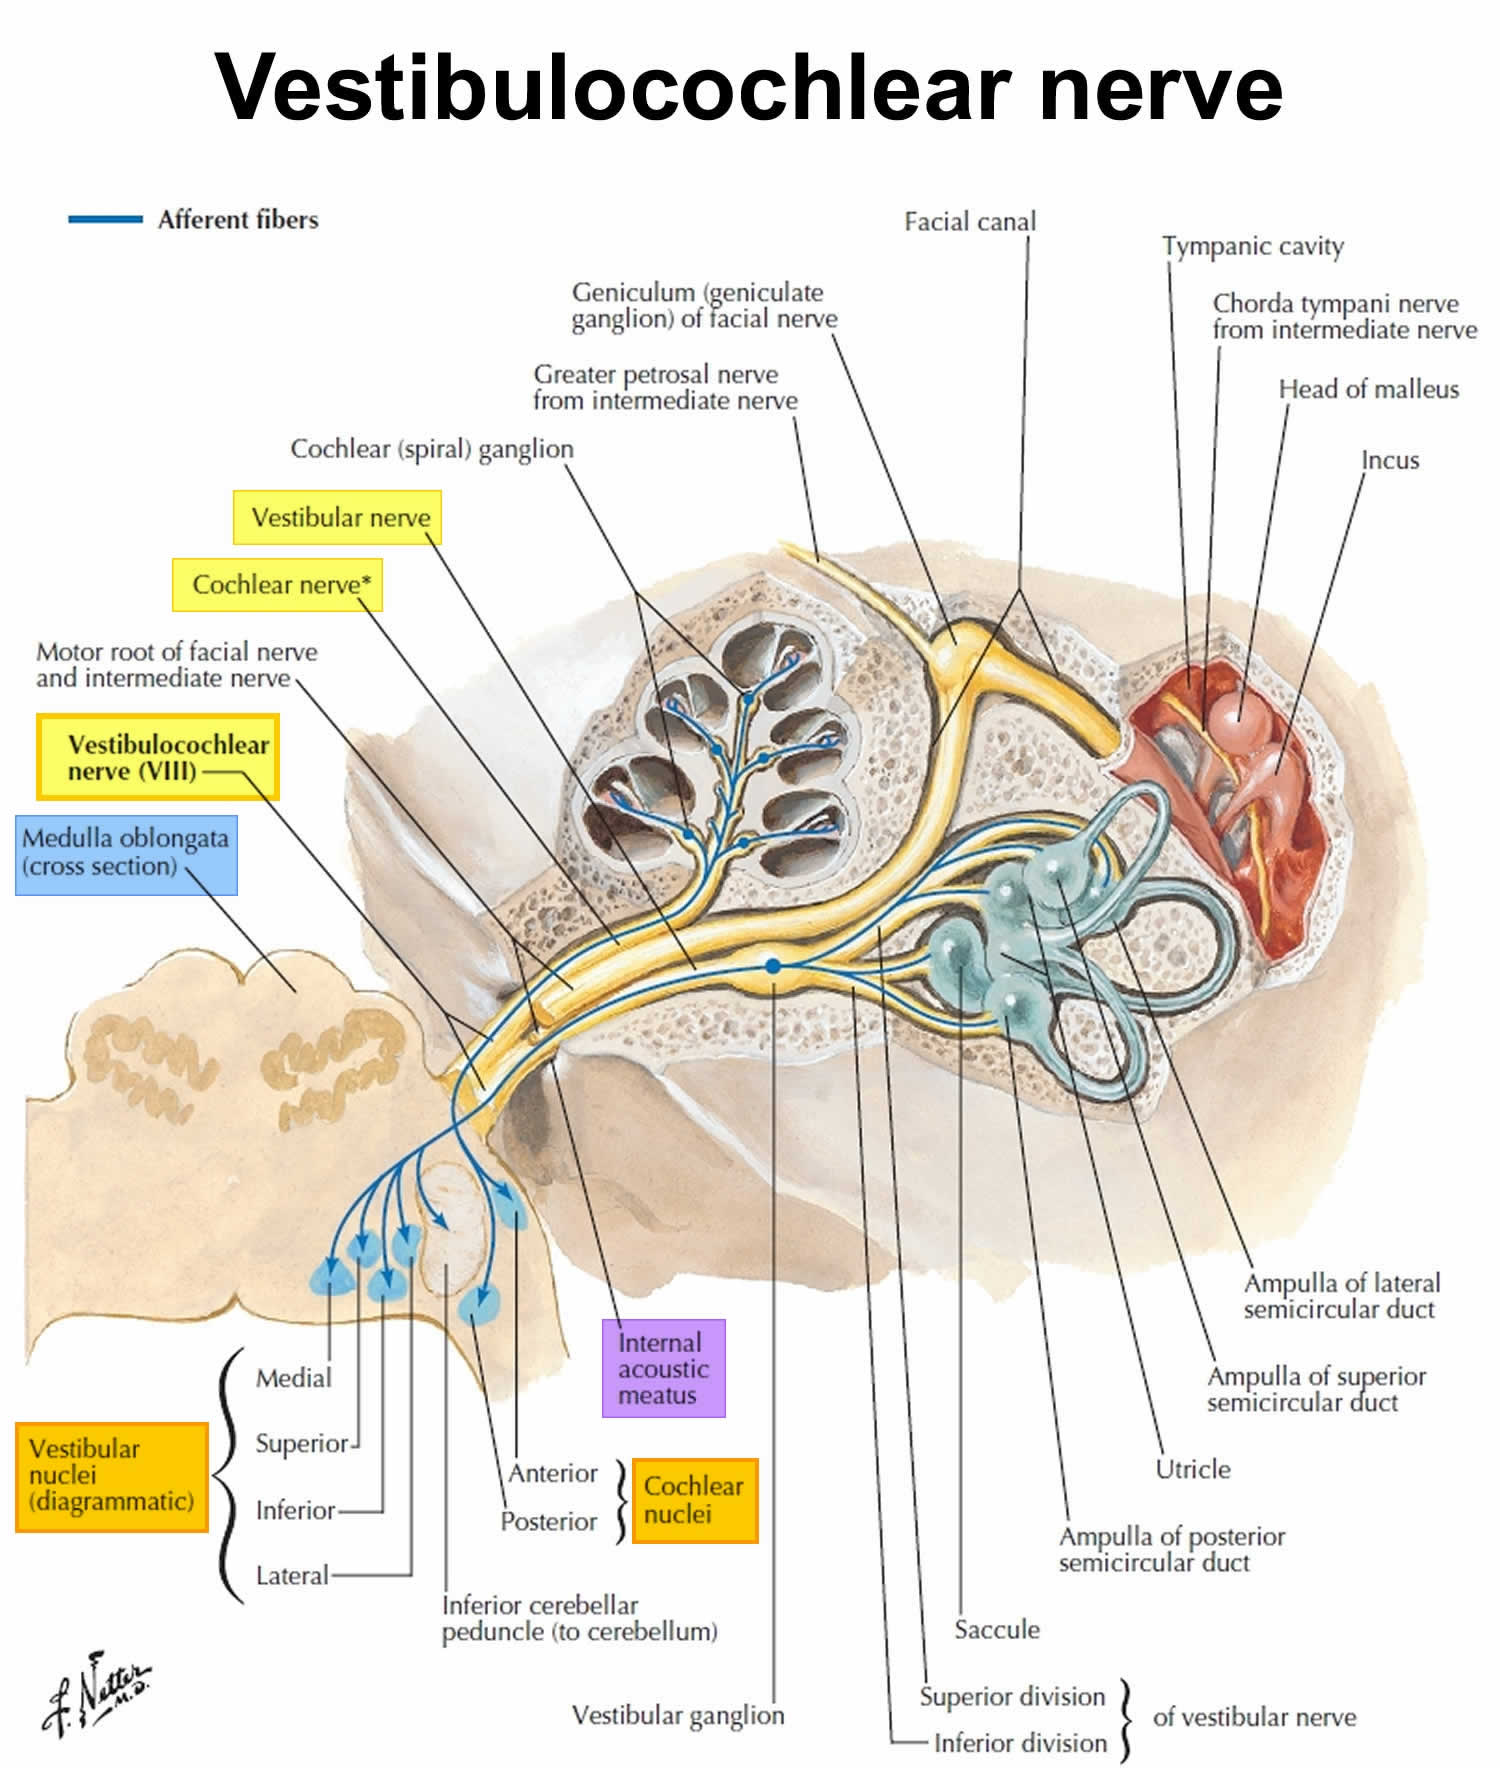 Vestibulocochlear nerve origin and destination